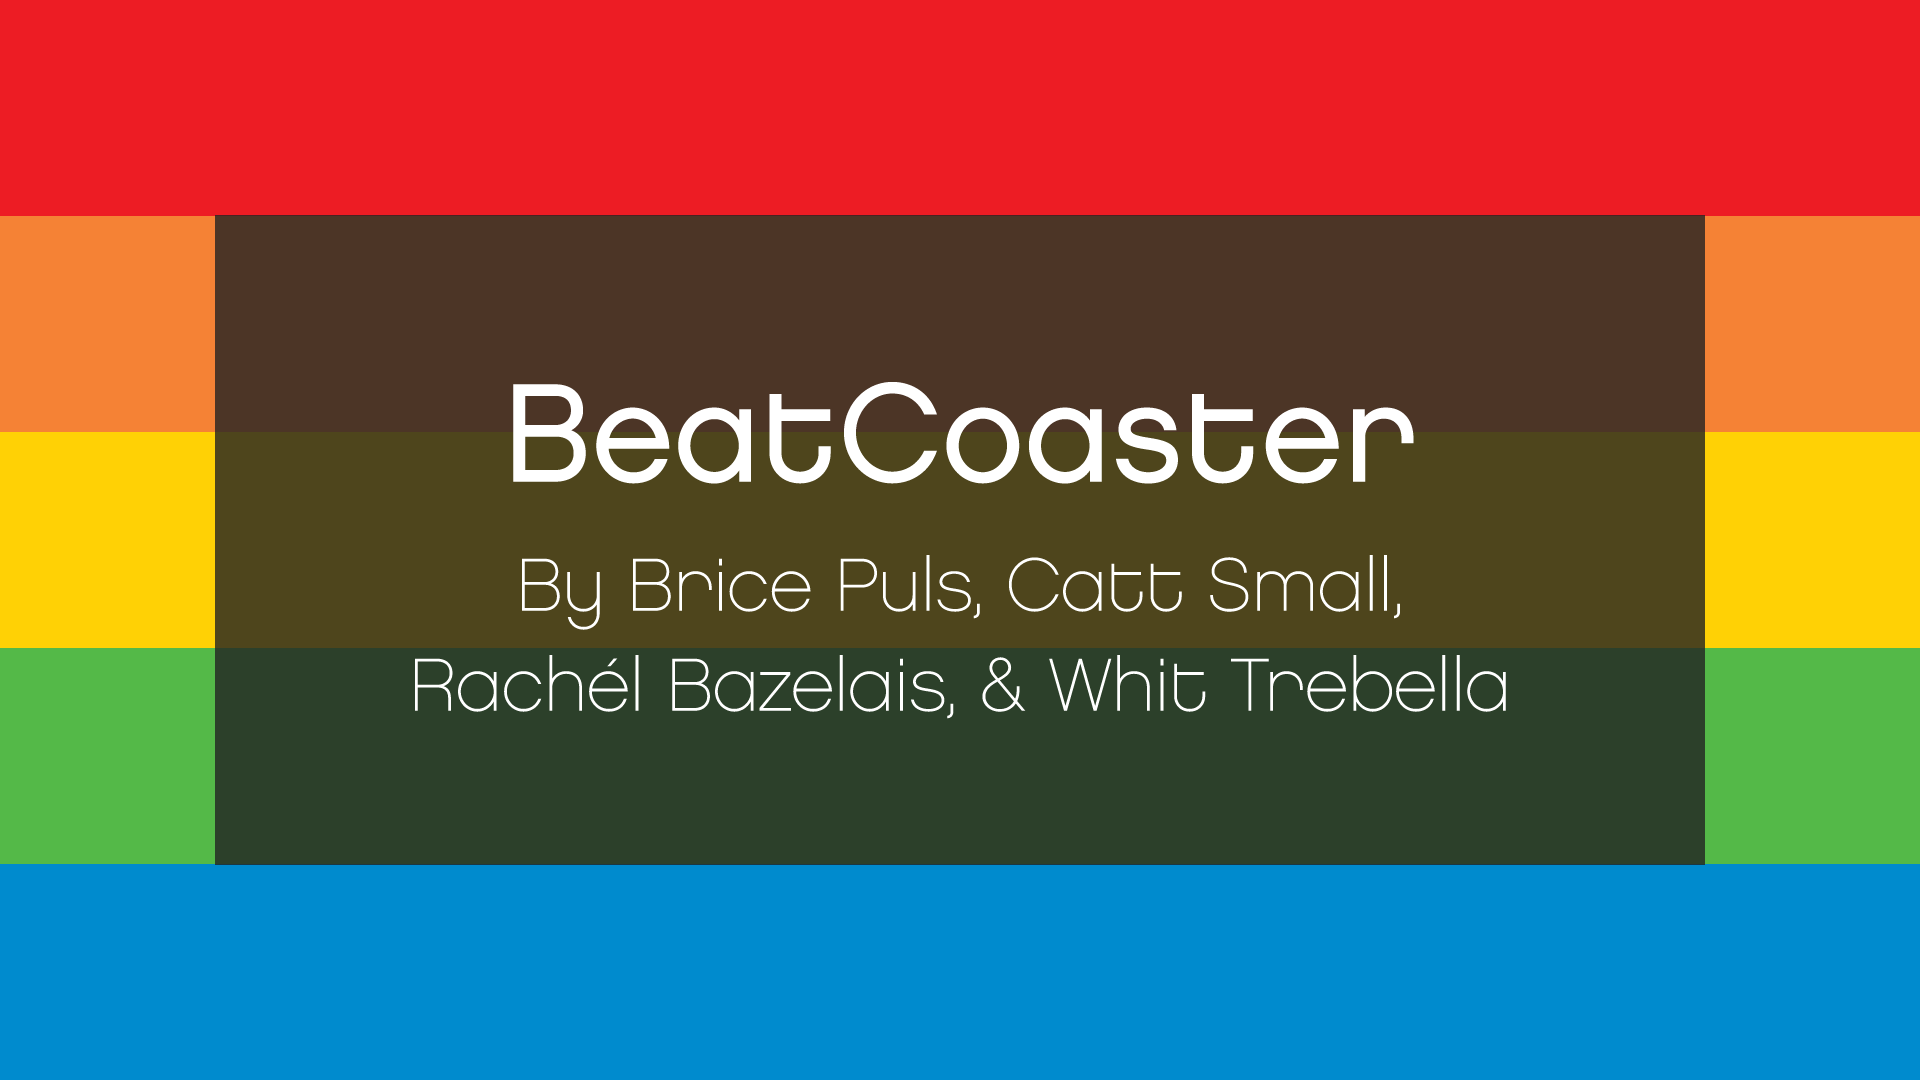 BeatCoaster